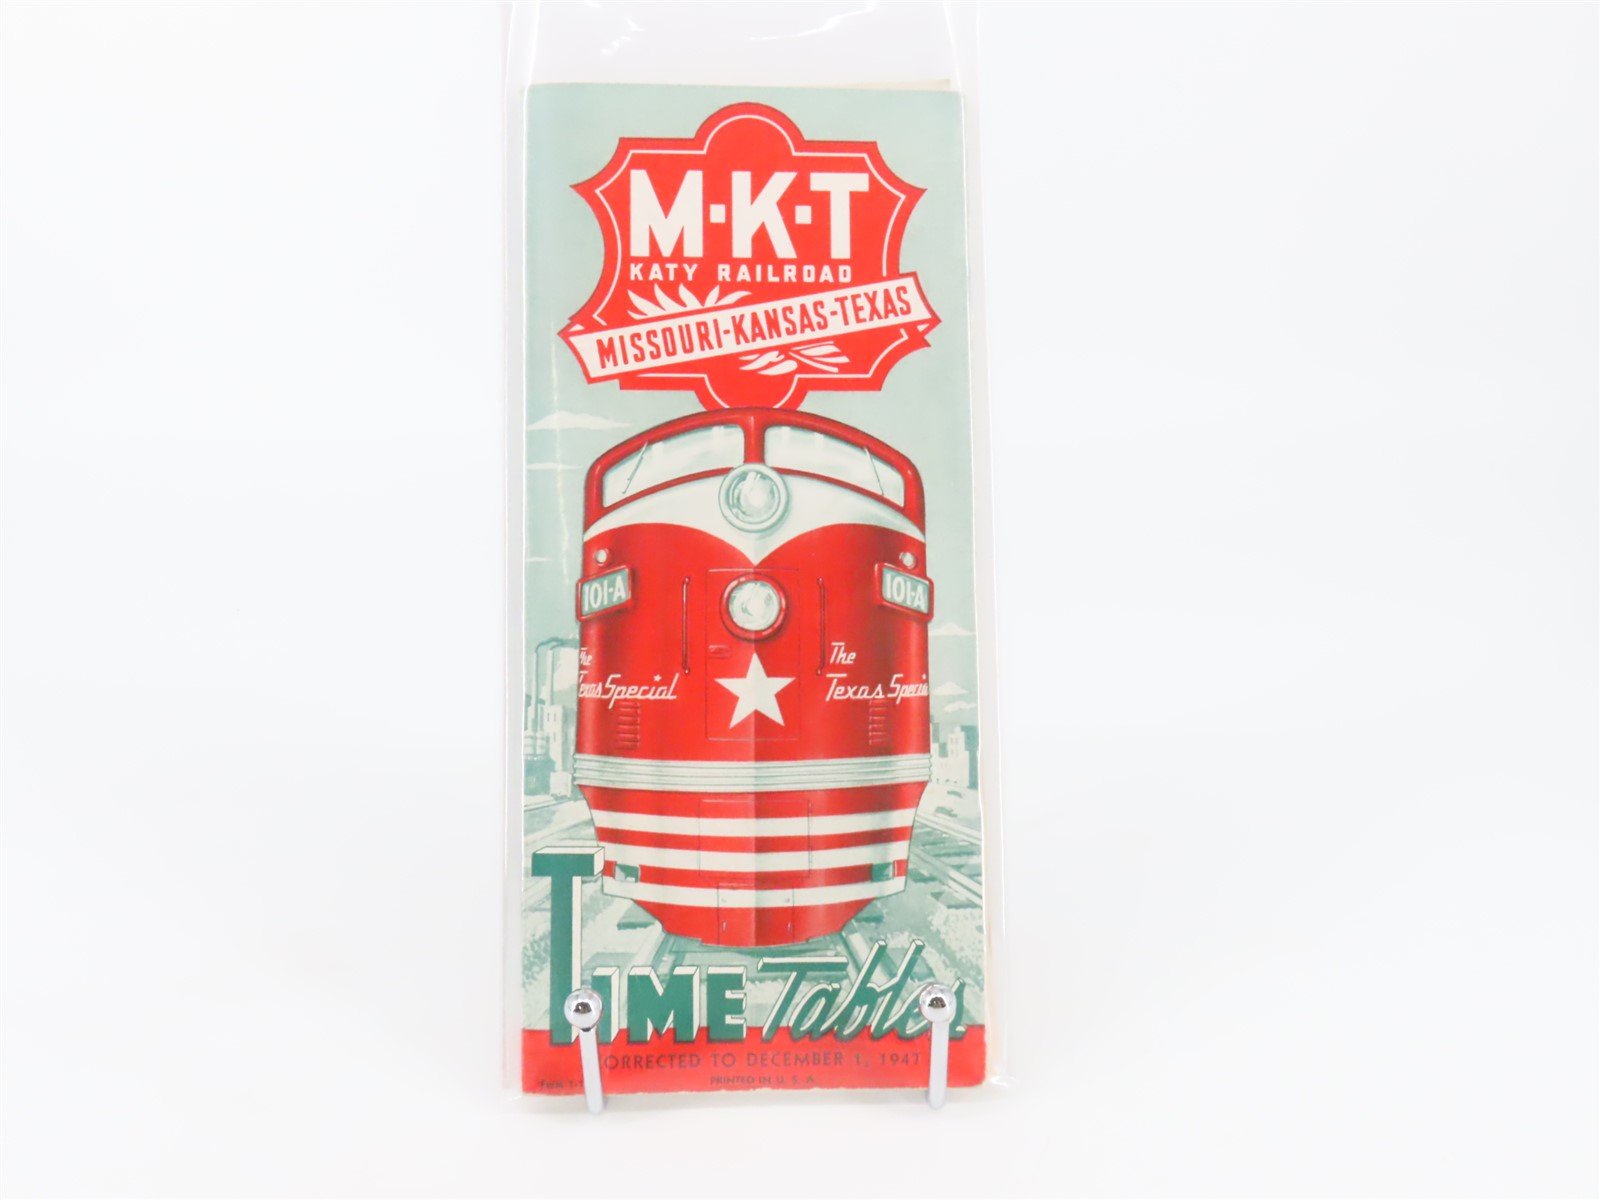 MKT Missouri Kansas Texas Katy Railroad Time Tables - December 1, 1947